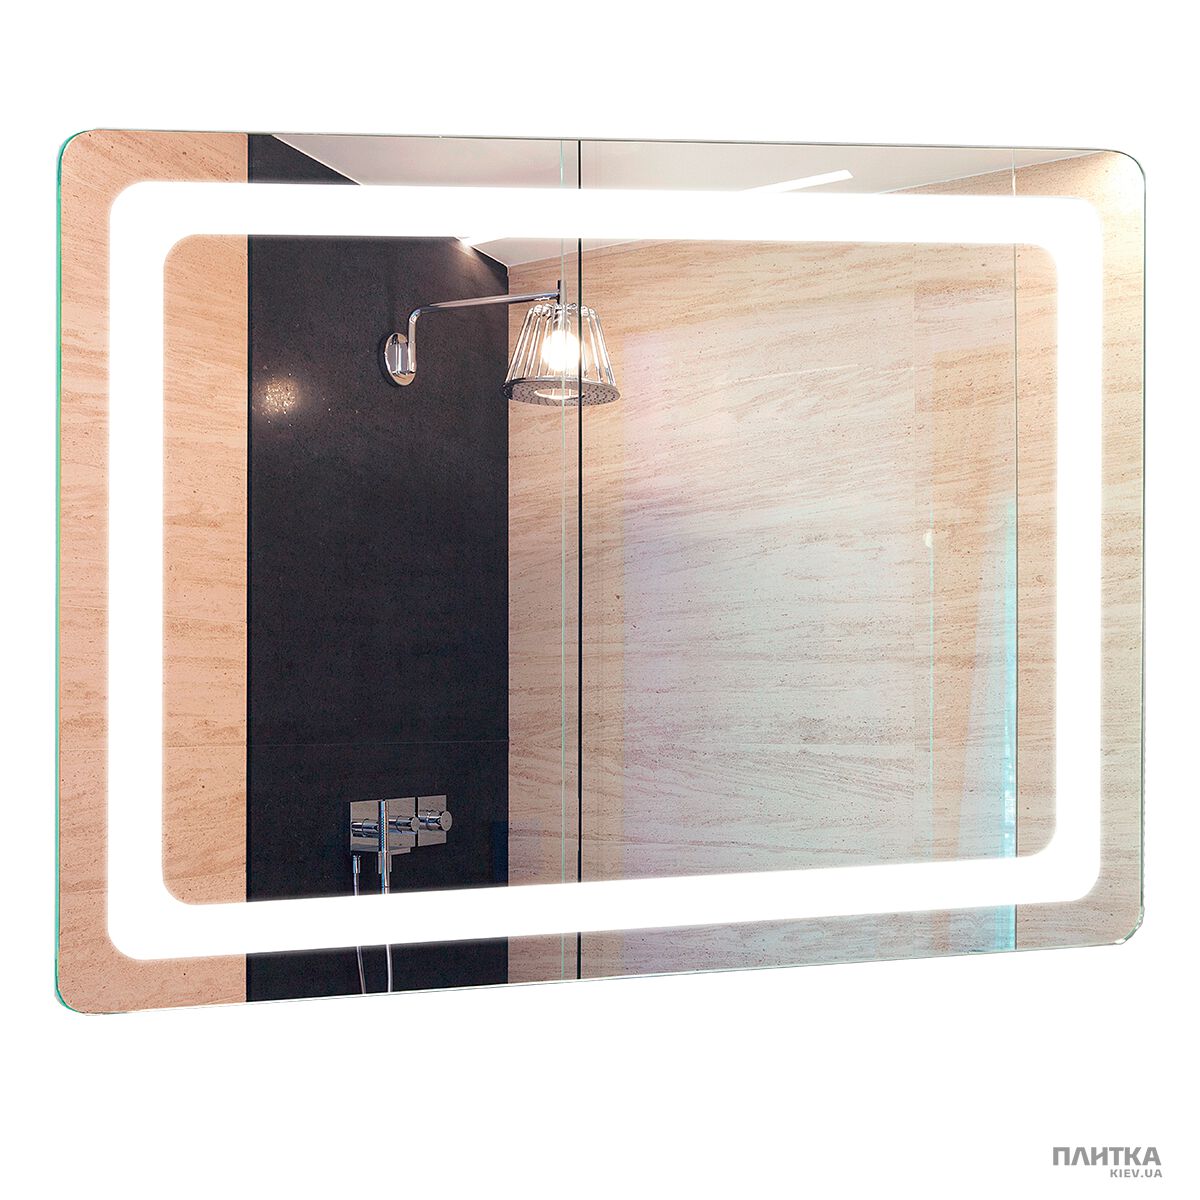 Зеркало для ванной Liberta Forli 700х800 с подсветкой хром